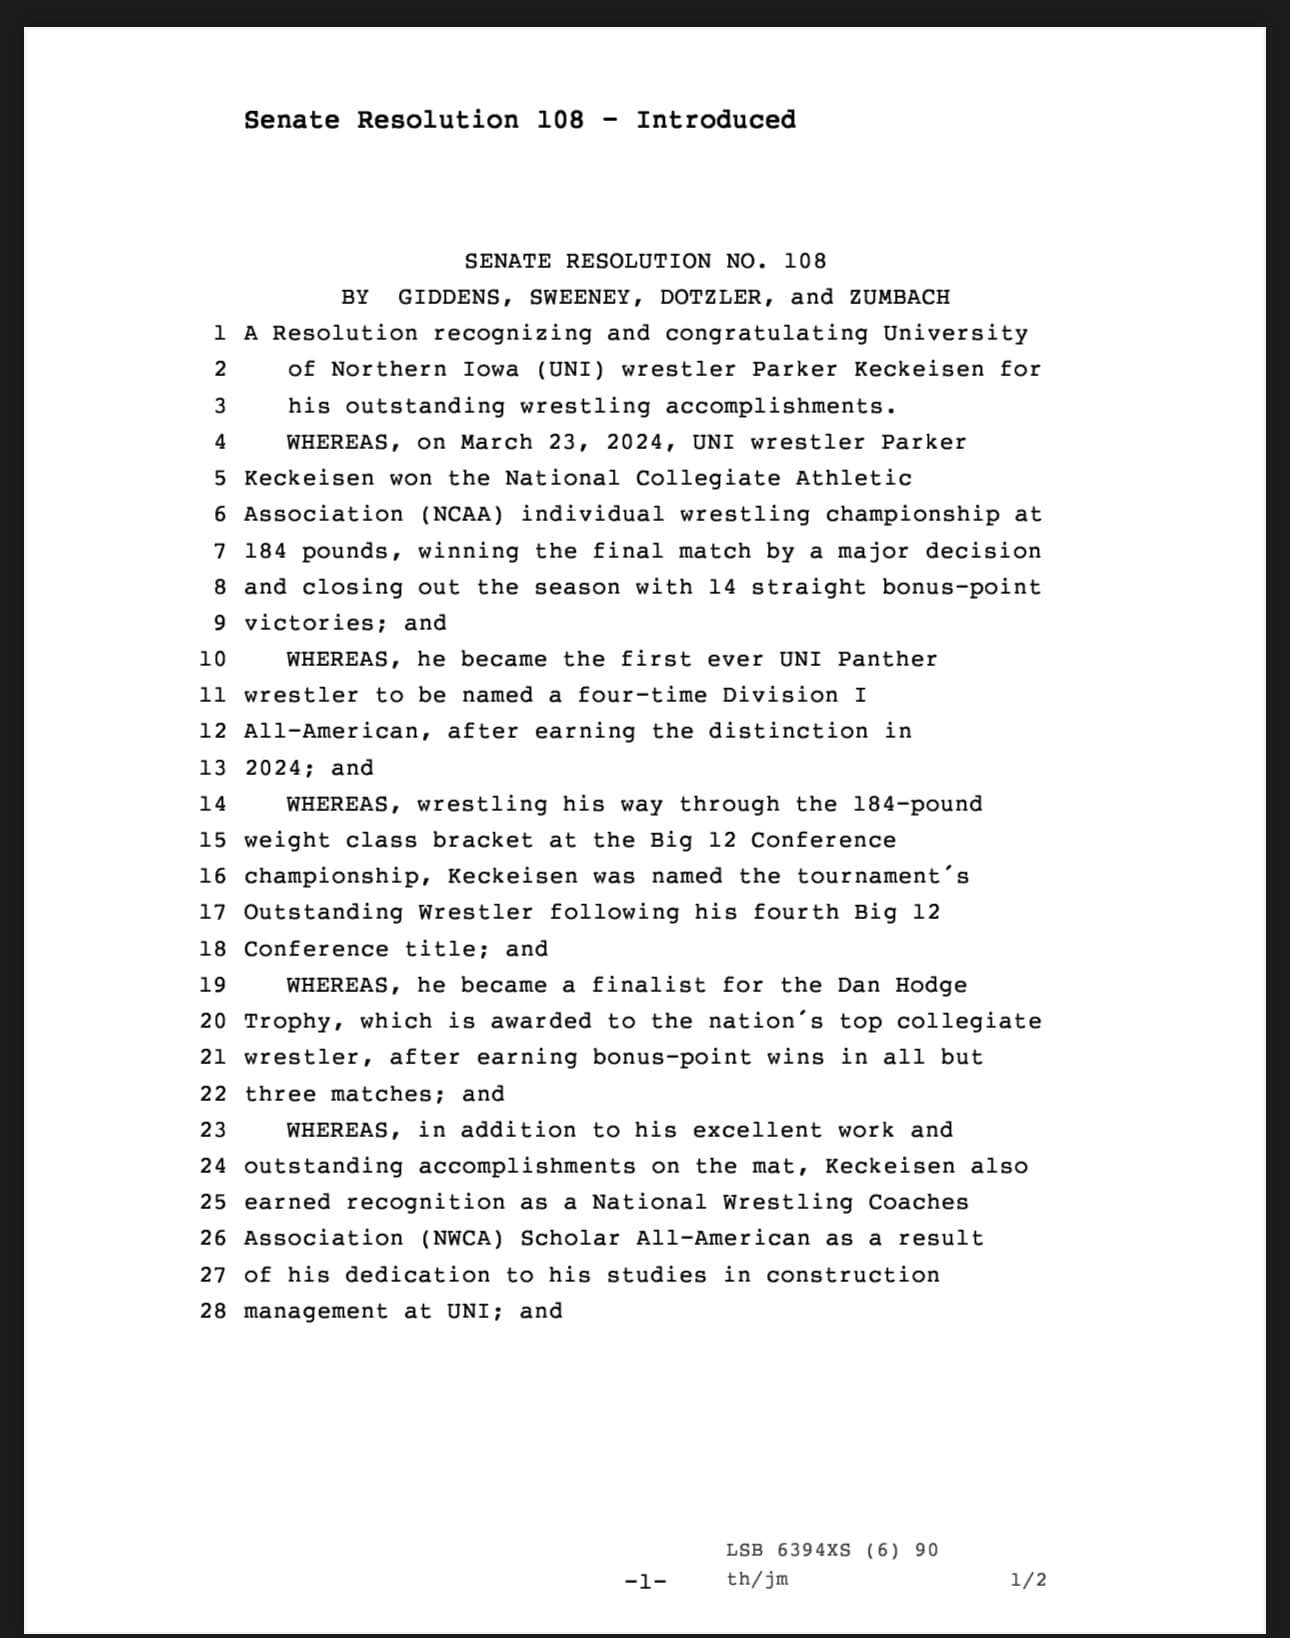 Senate resolution 108 introduced